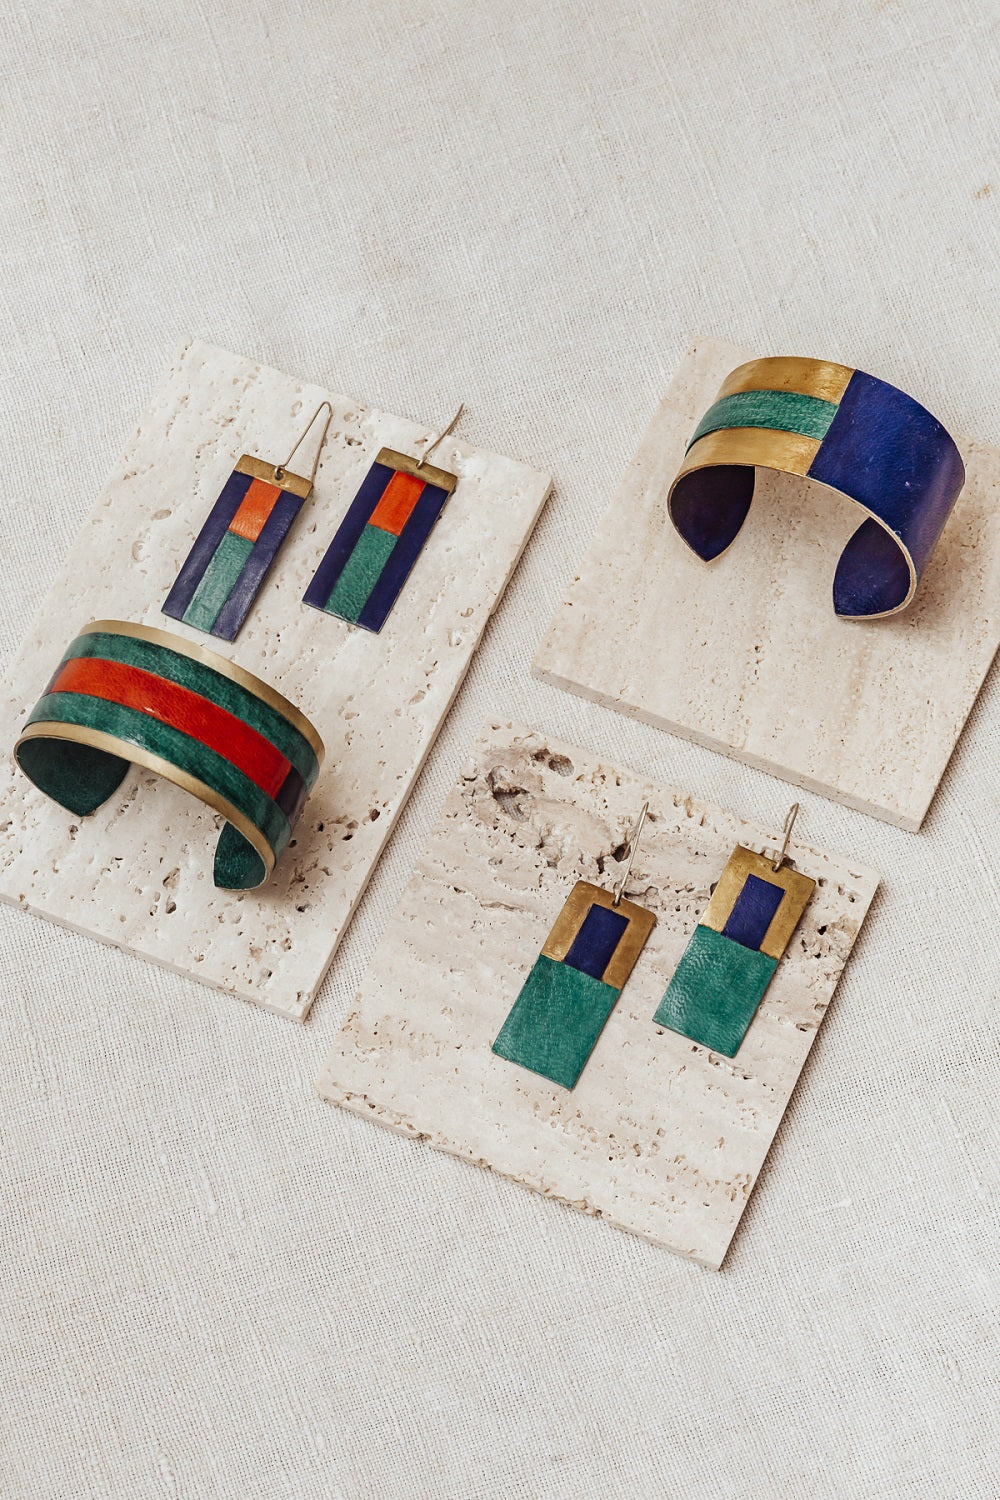 Artisan & Fox - Jewellery - TUAREG Colourblock Cuff in Turquoise - Handcrafted in Burkina Faso